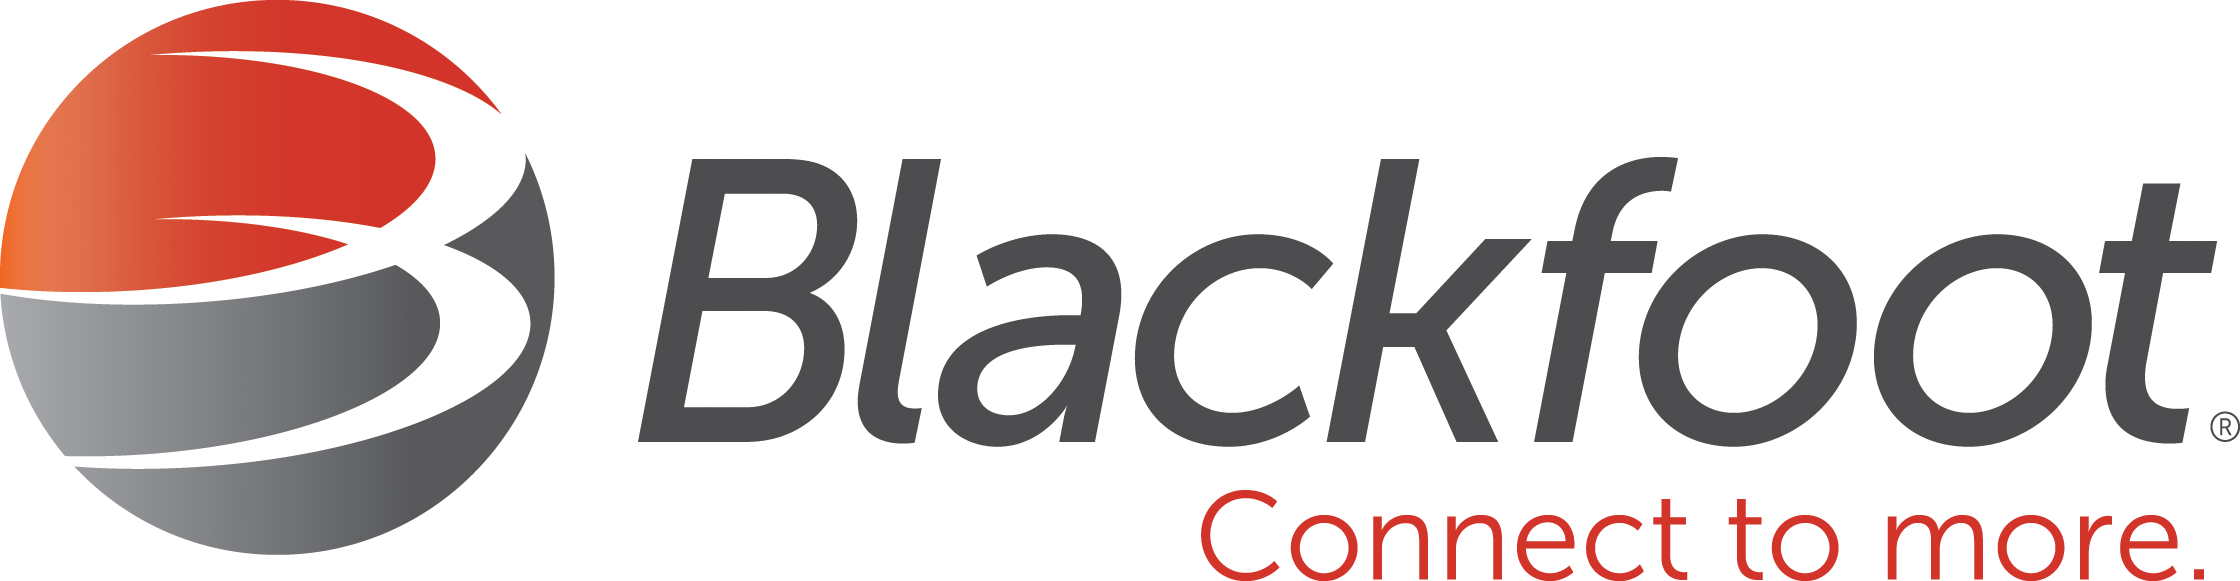 Blackfoot_telephone_Logo.png